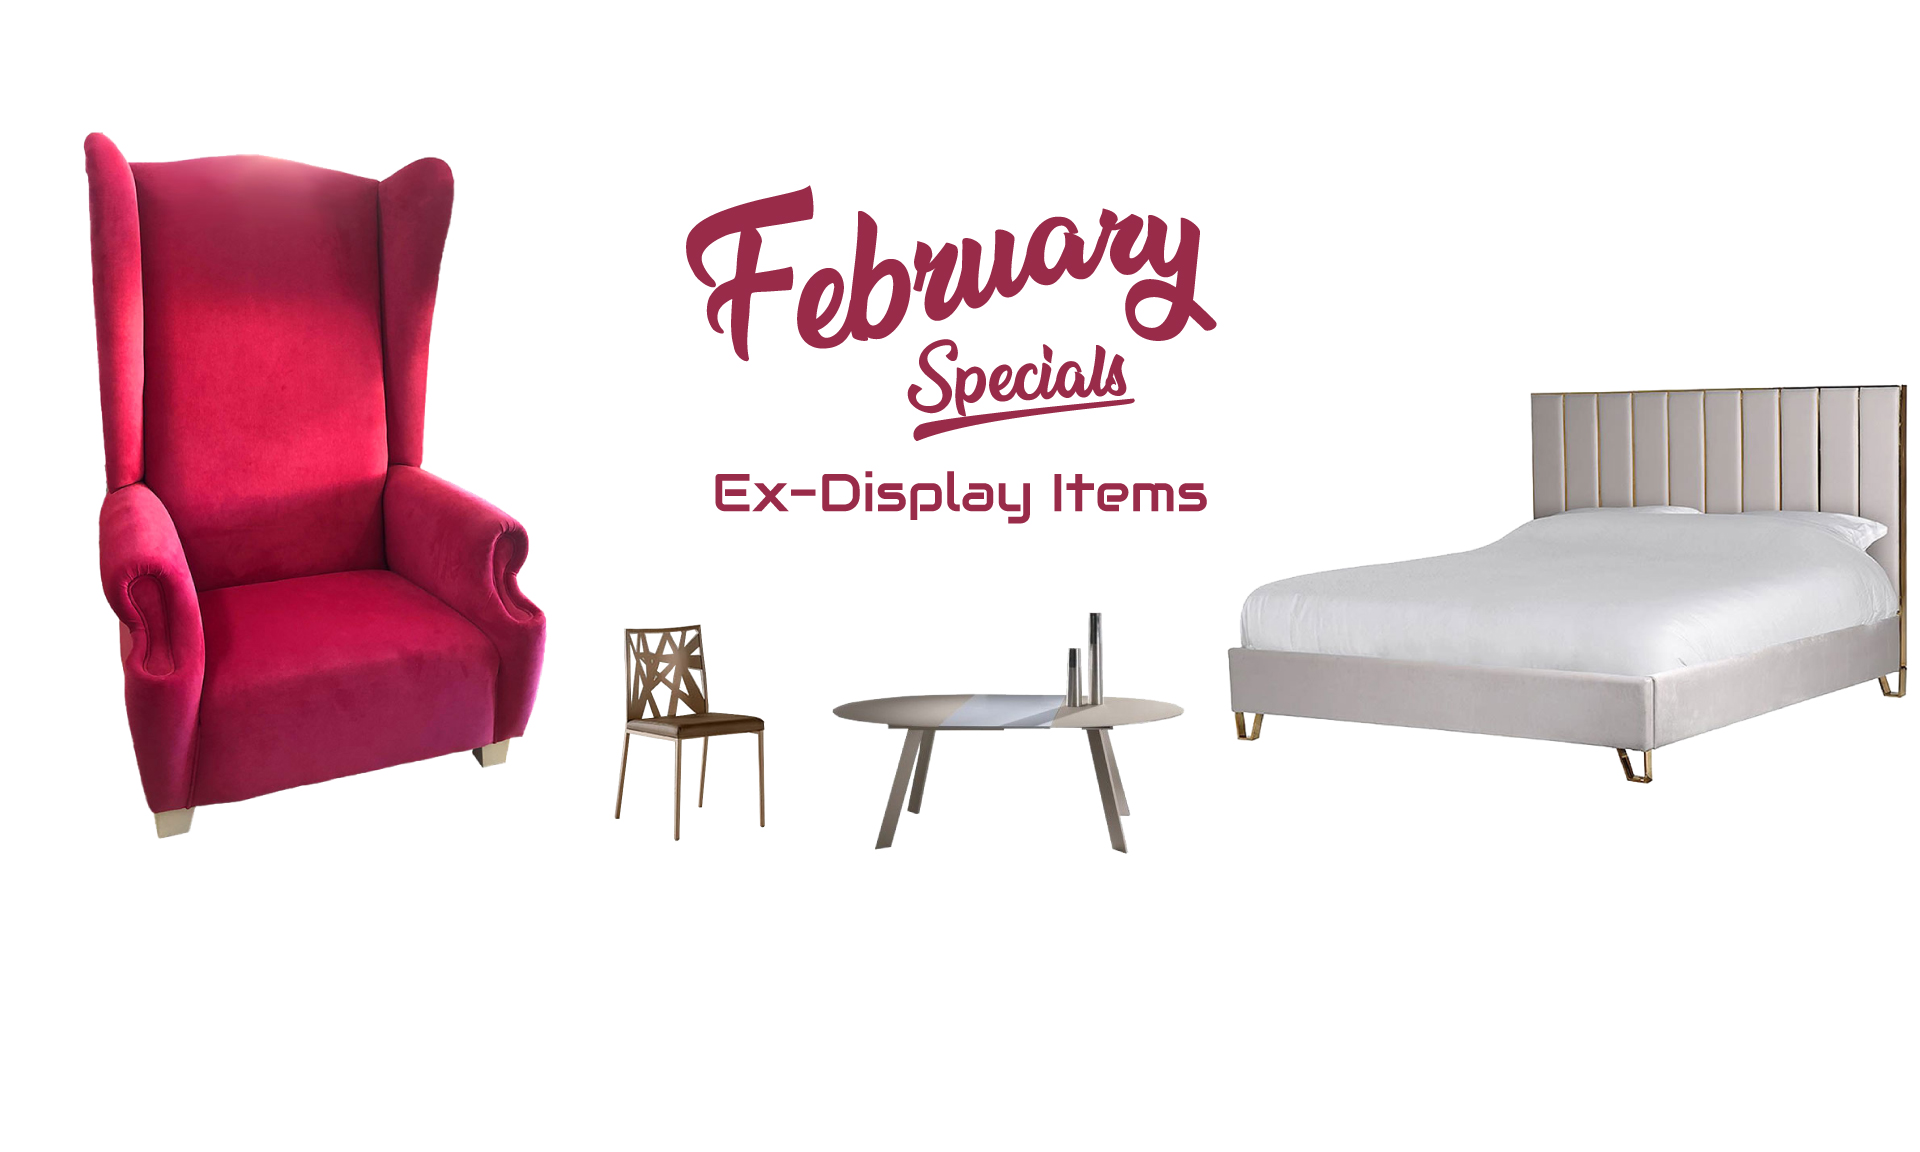 February Specials - Ex-Display Items